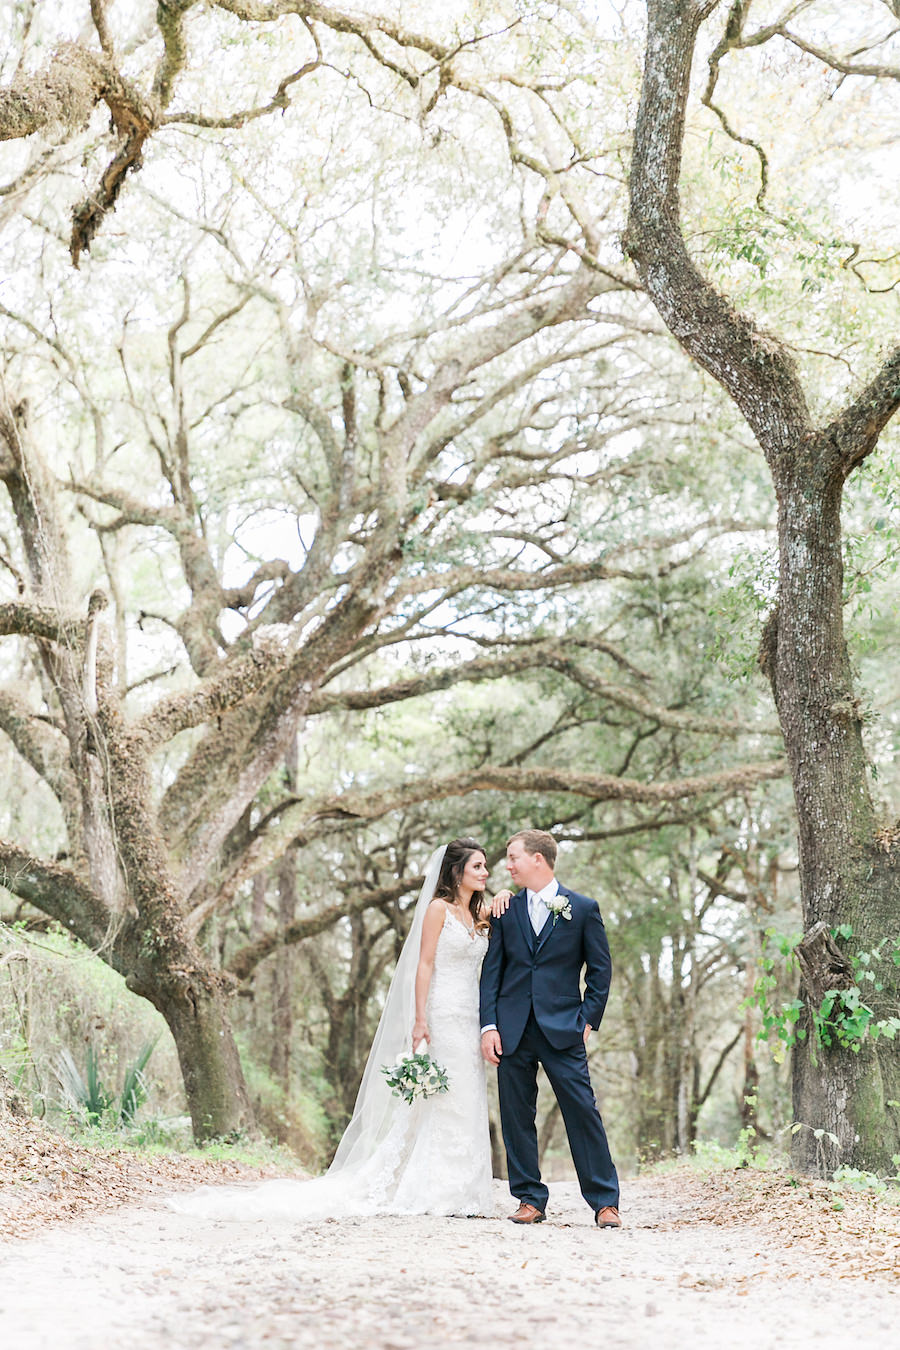 Bride and Groom Wedding Portrait at Outdoor Tampa Bay Wedding Venue | Rustic, Country Wedding Inspiration